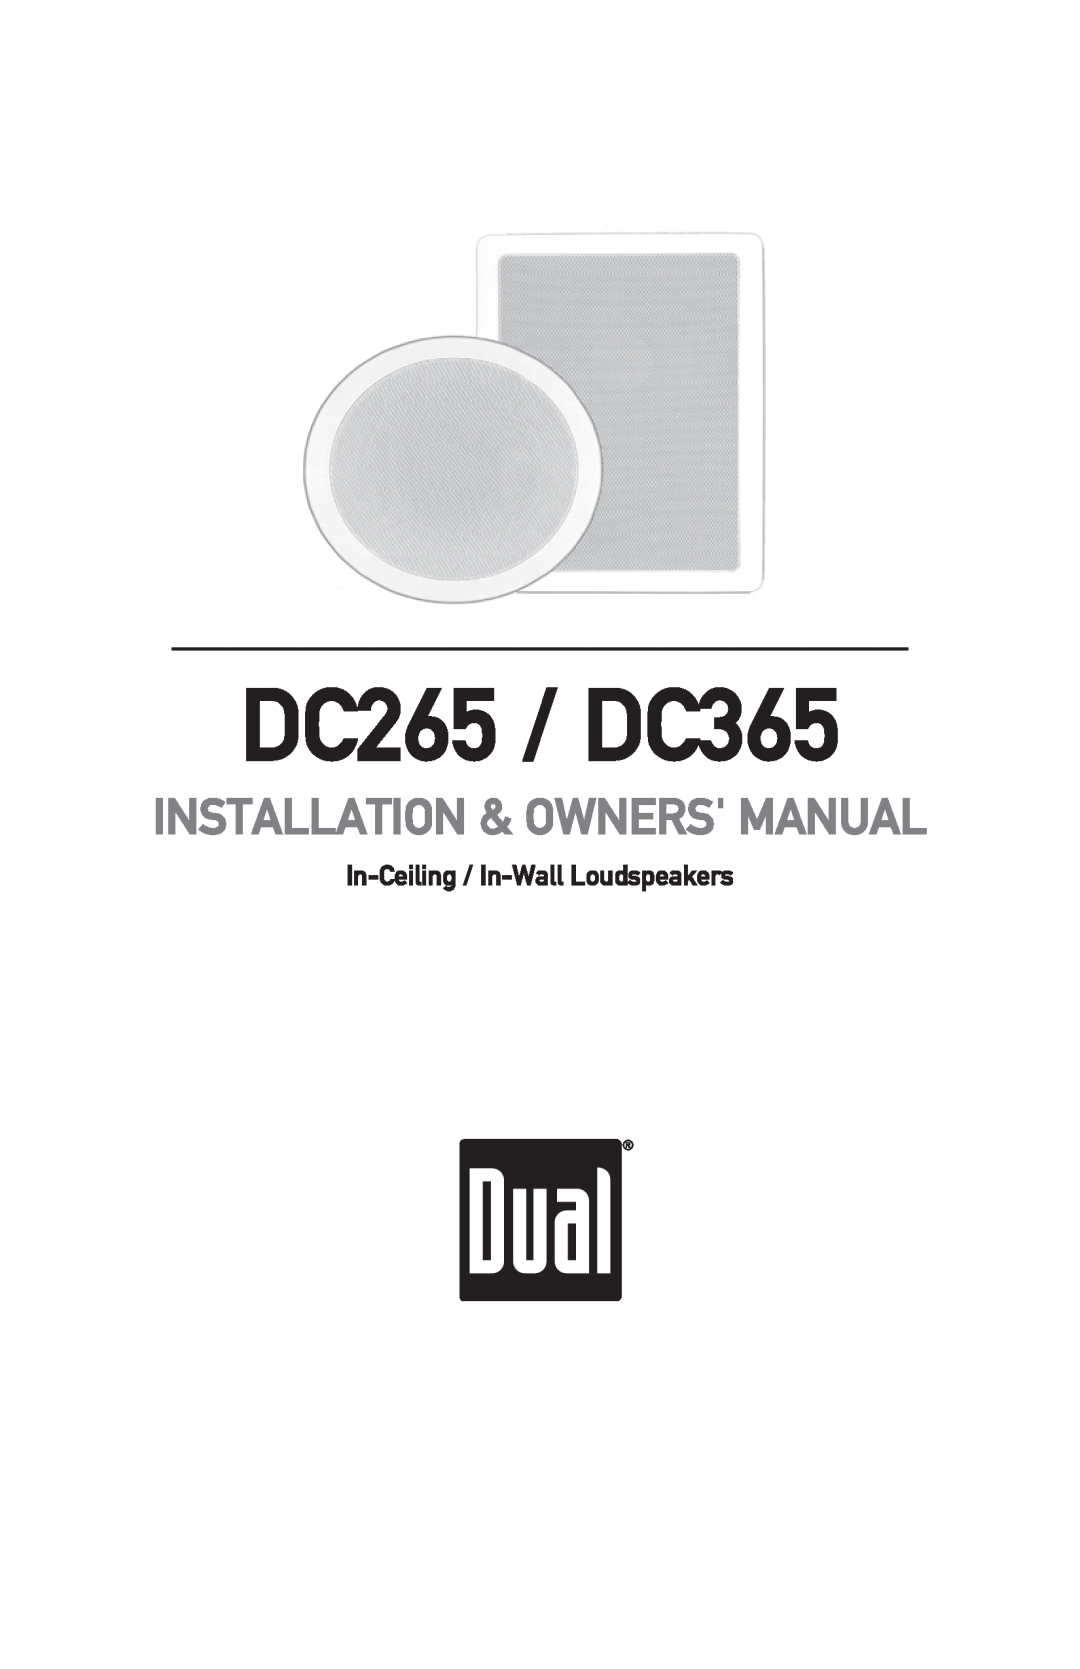 Dual owner manual DC265 / DC365, In-Ceiling / In-WallLoudspeakers 